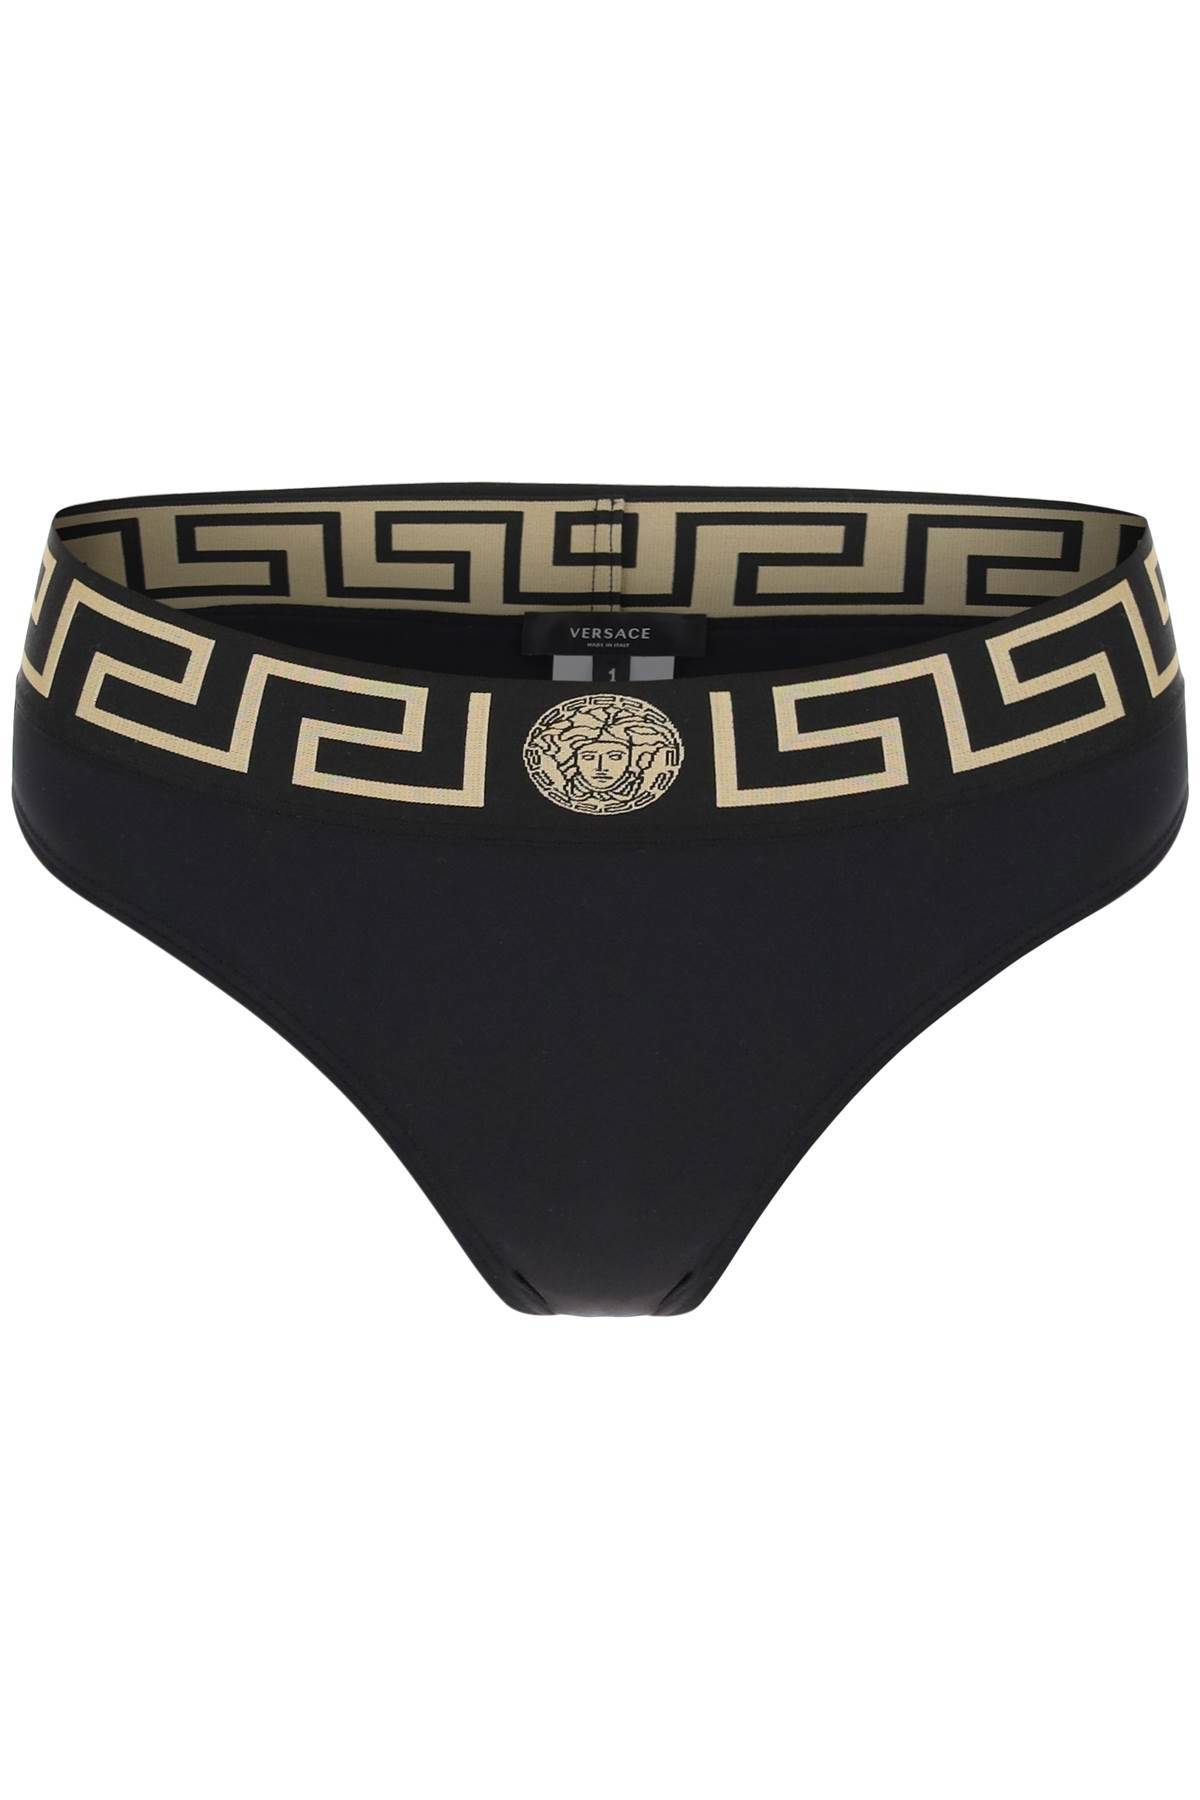 Versace VERSACE bikini bottom with greca band